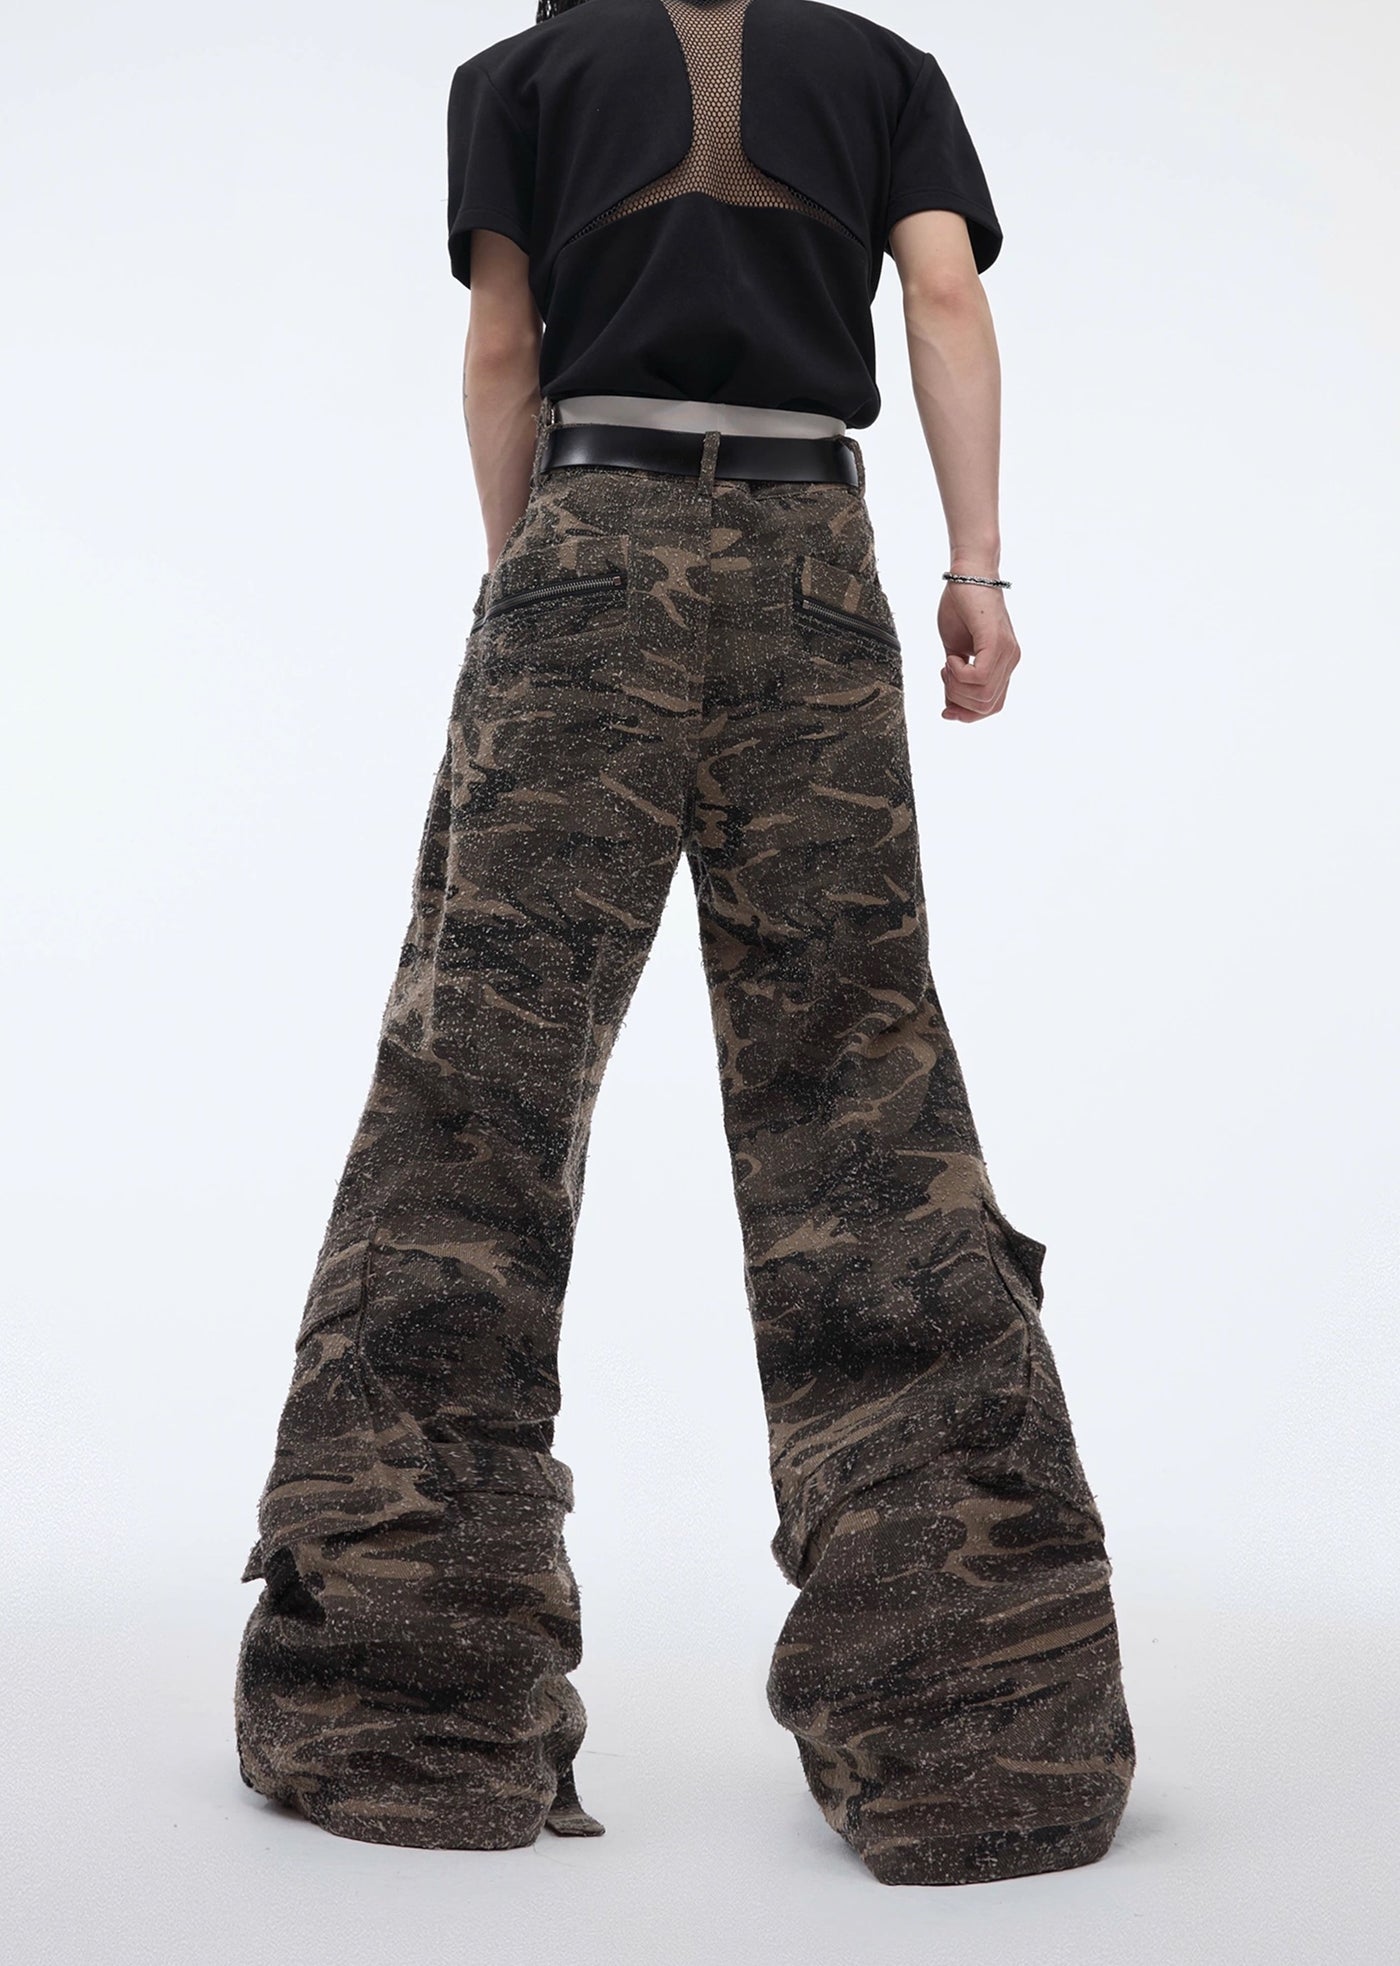 [Culture E] Dark camouflage pattern coloring laces wide flare silhouette denim pants CE0124